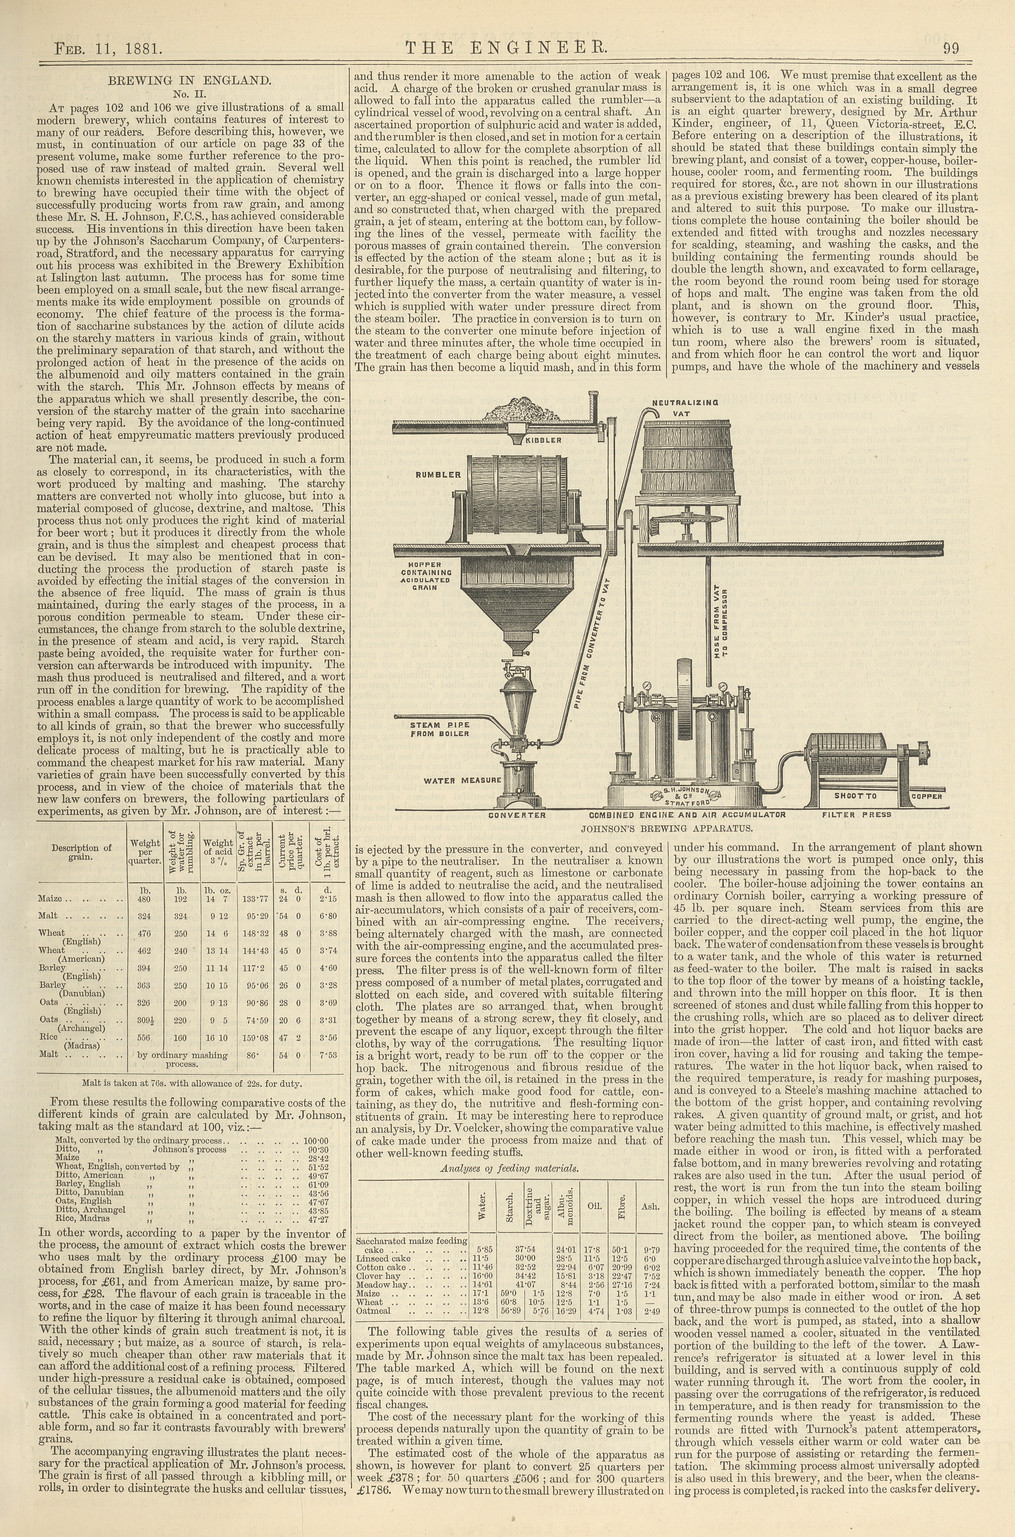 The Engineer, Vol.51, 11 February